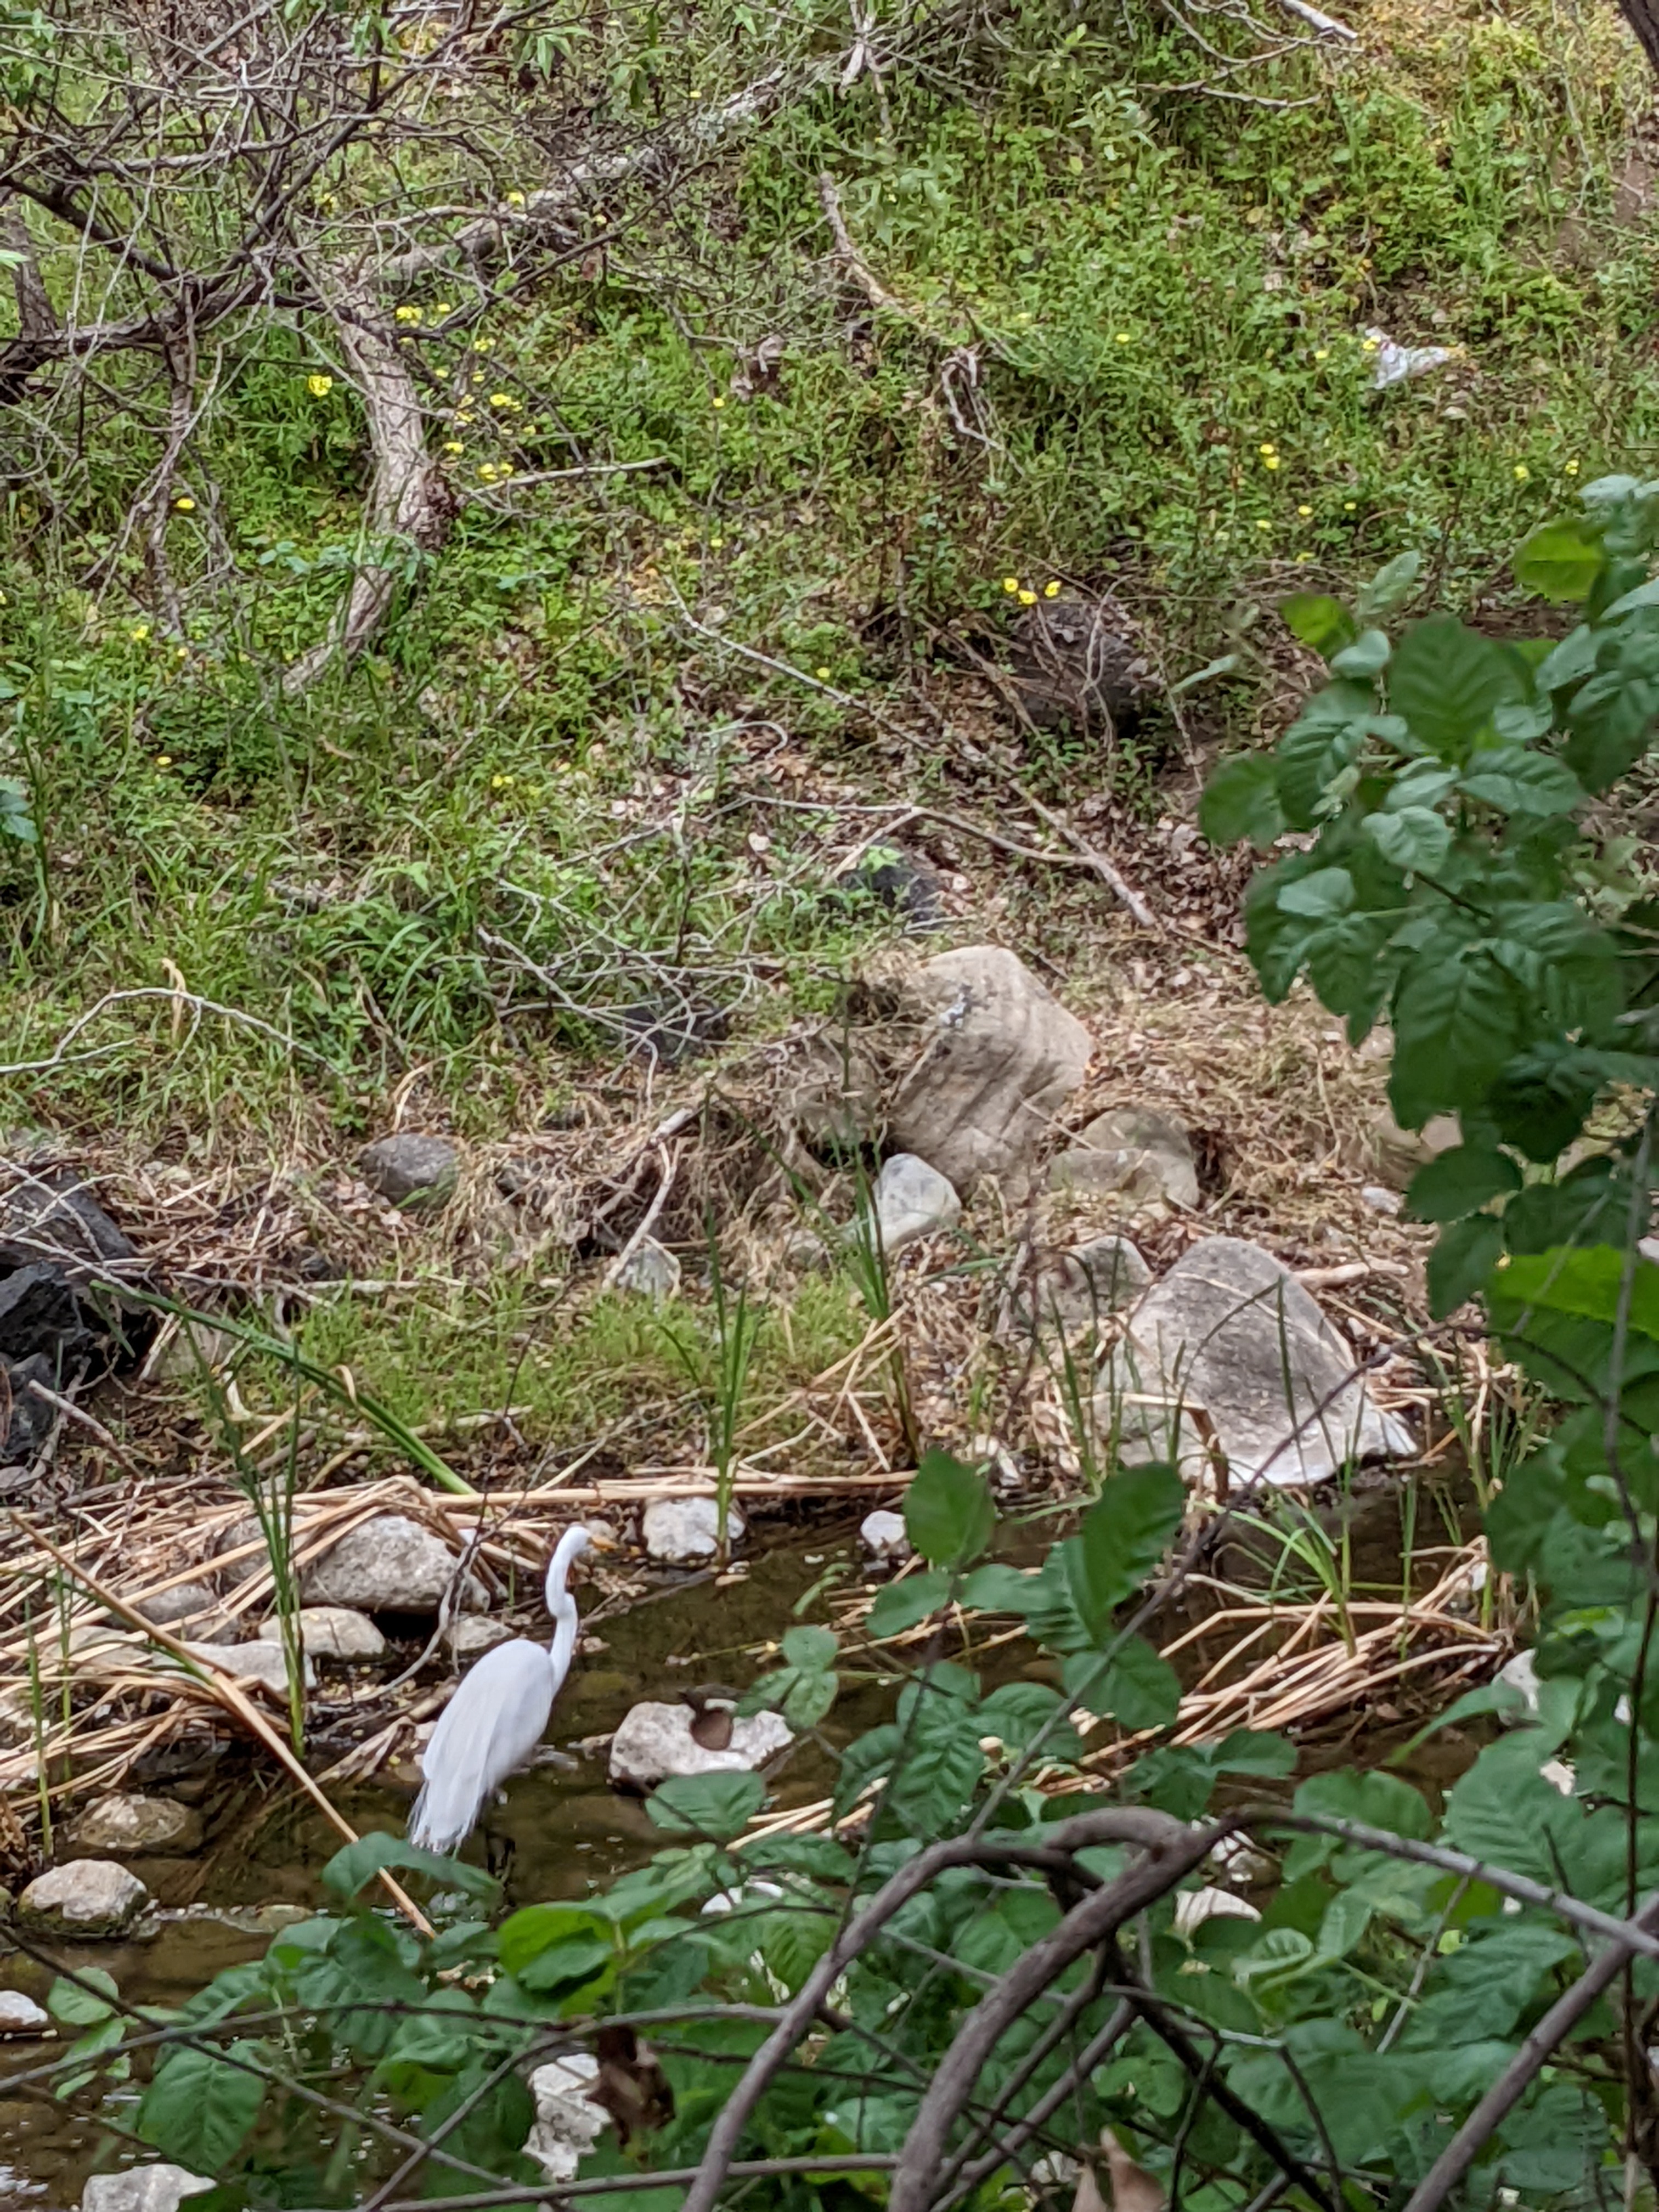 An egret wading in Penitencia Creek